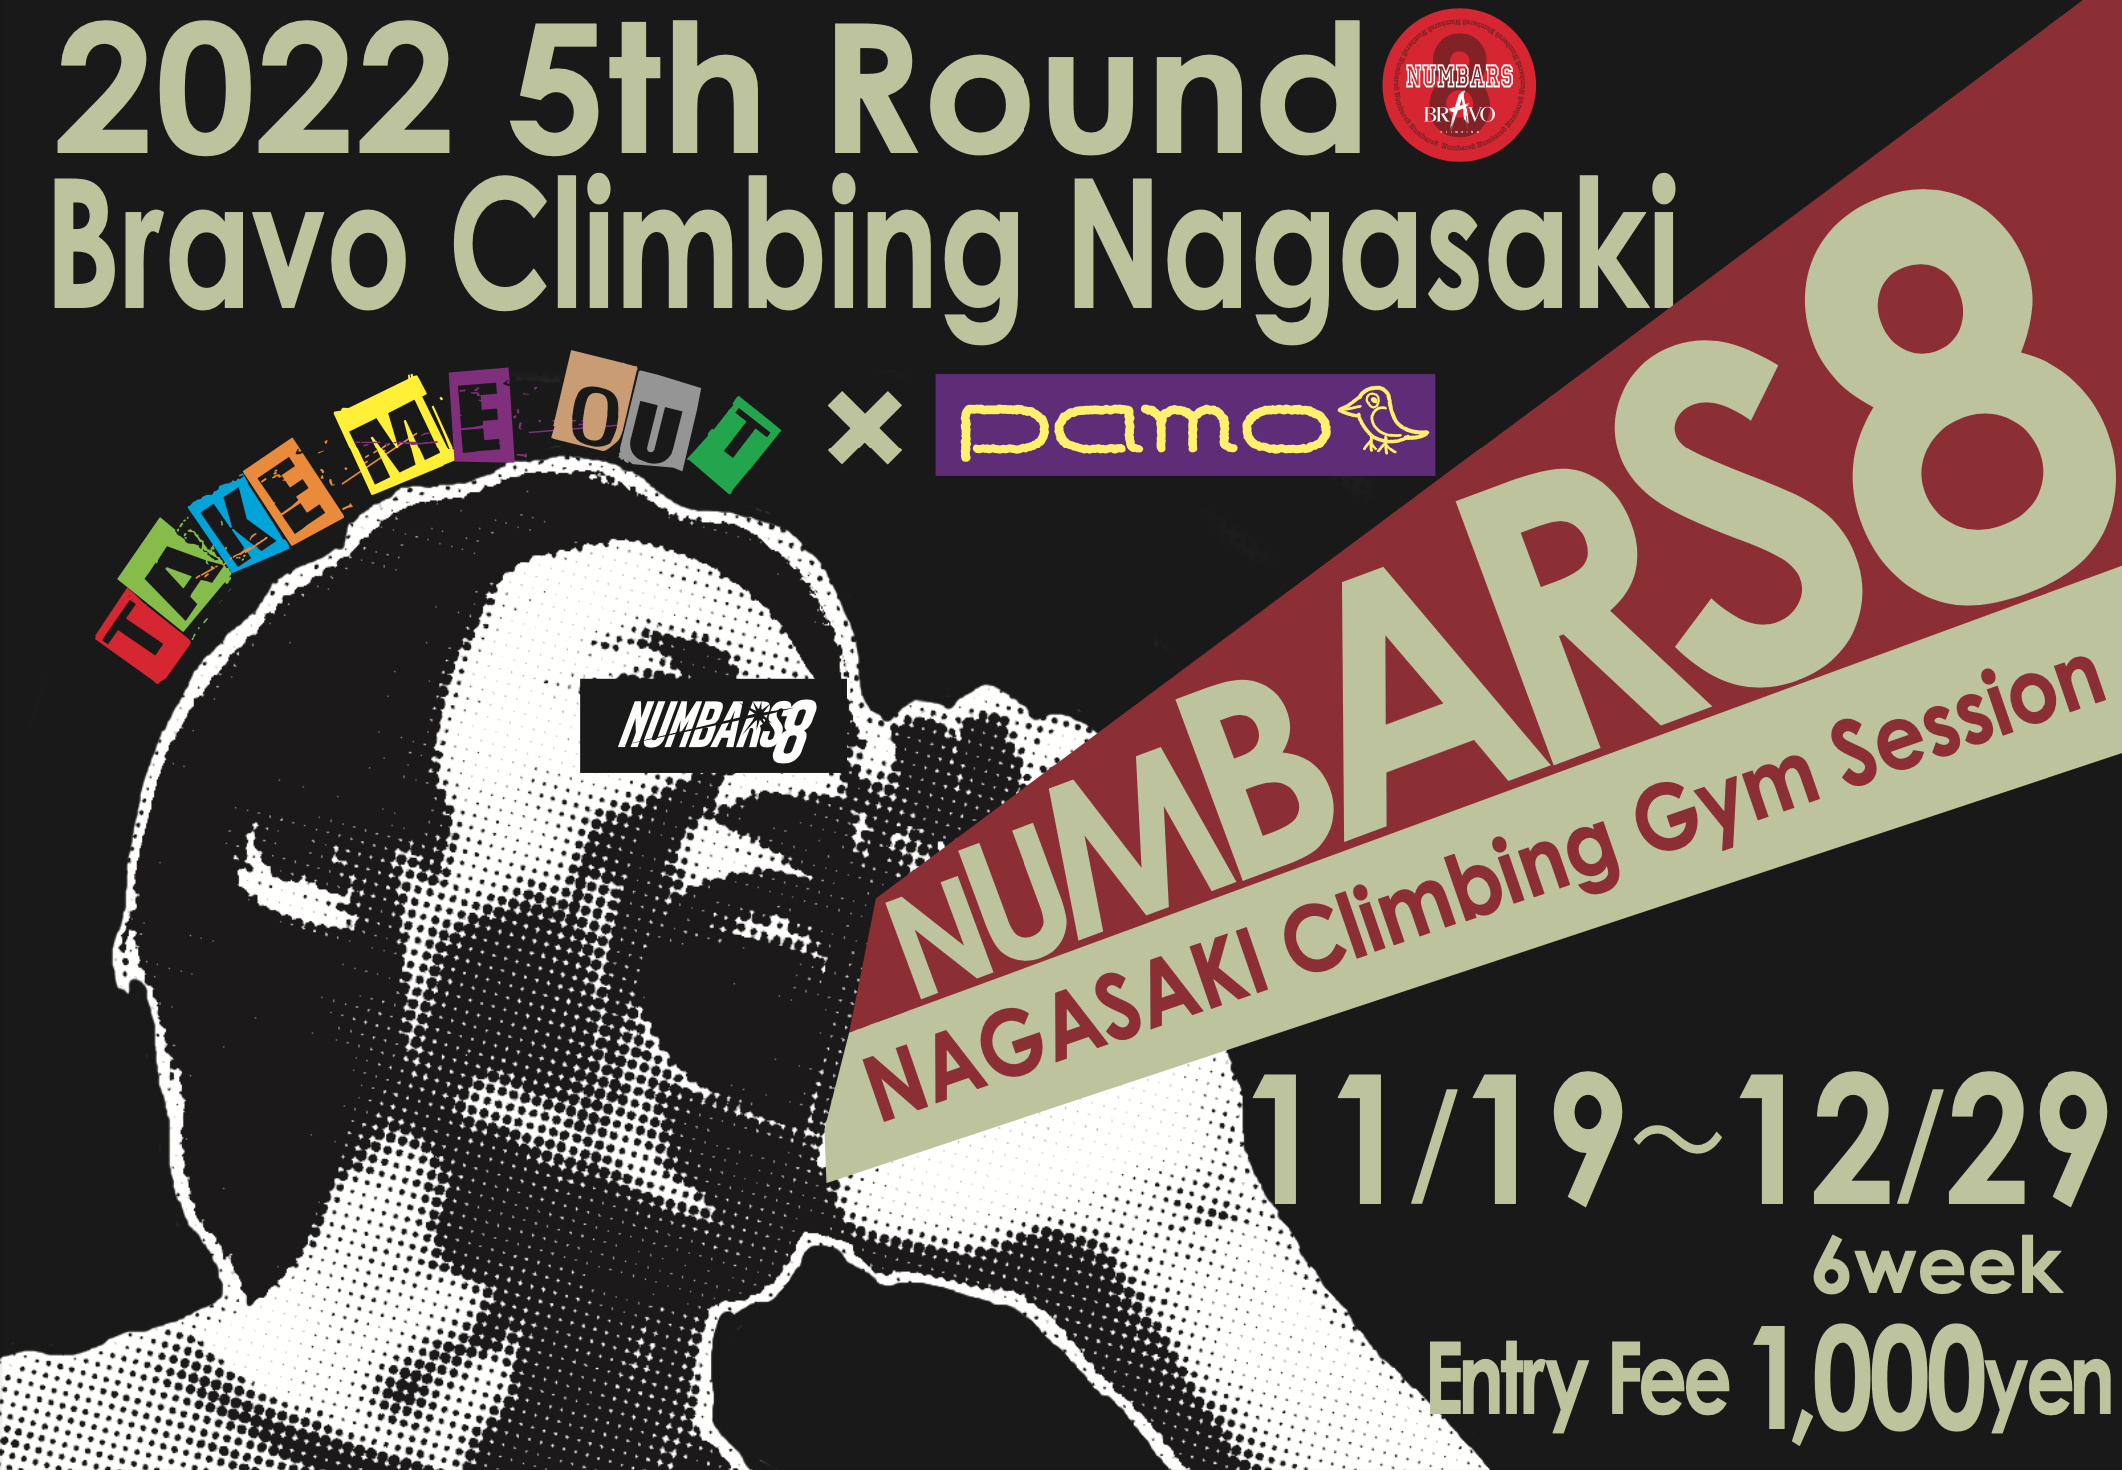 Numbars8 Final Round Bravo Climbing Nagasaki戦！！コインパーキングのご案内。